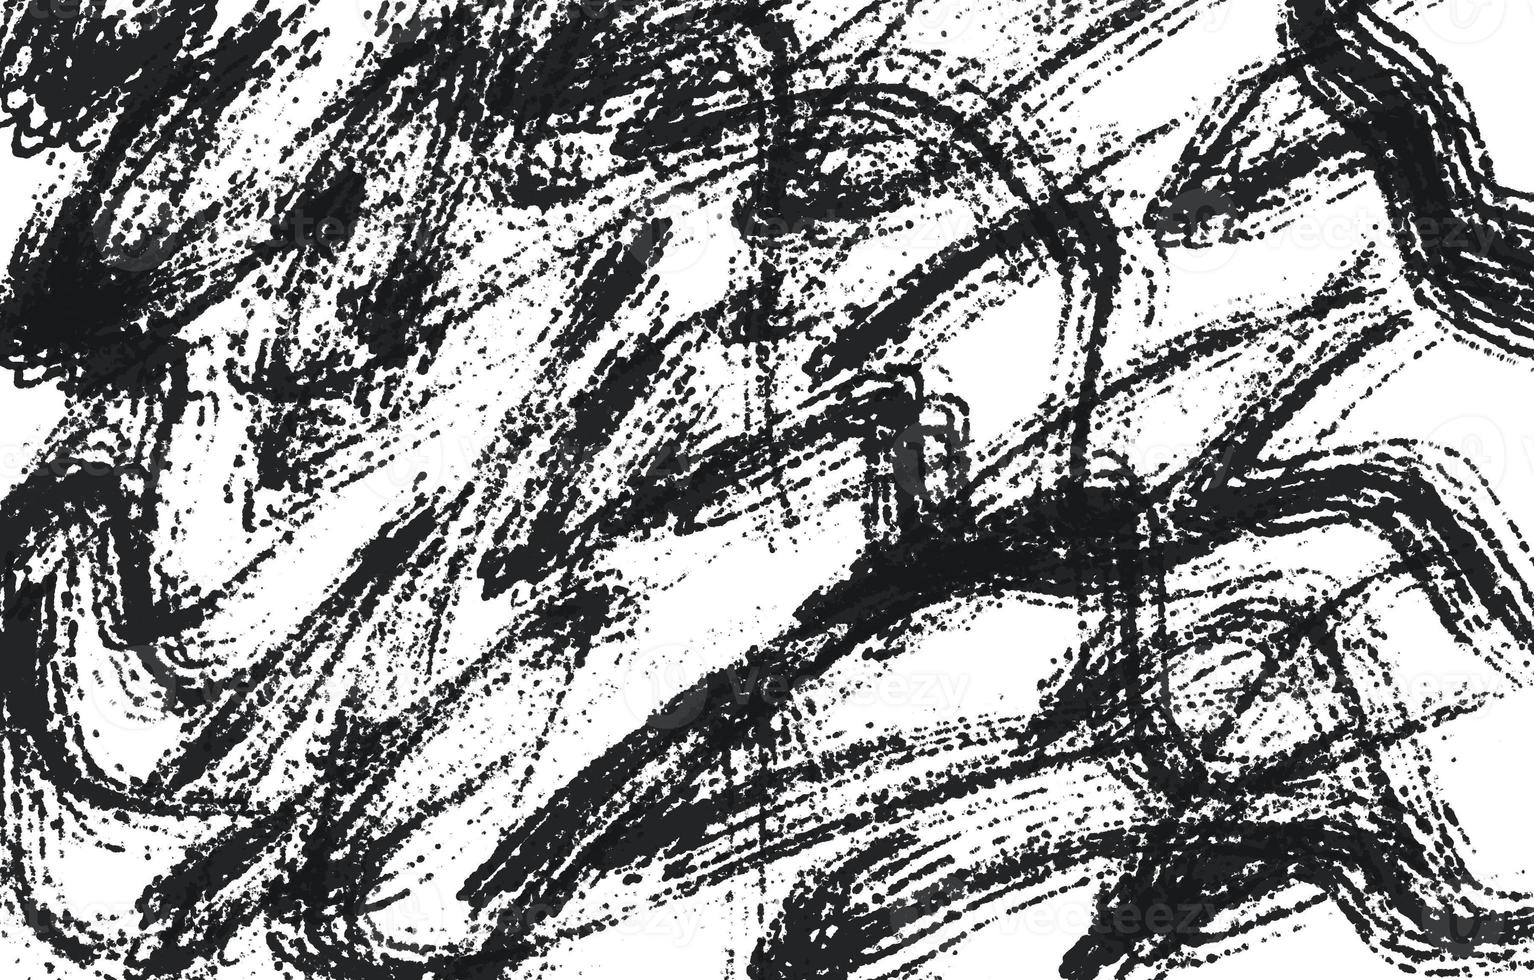 zero grunge urbano background.grunge textura de angústia preto e branco. textura grunge para fazer pôster, banner, fonte. foto